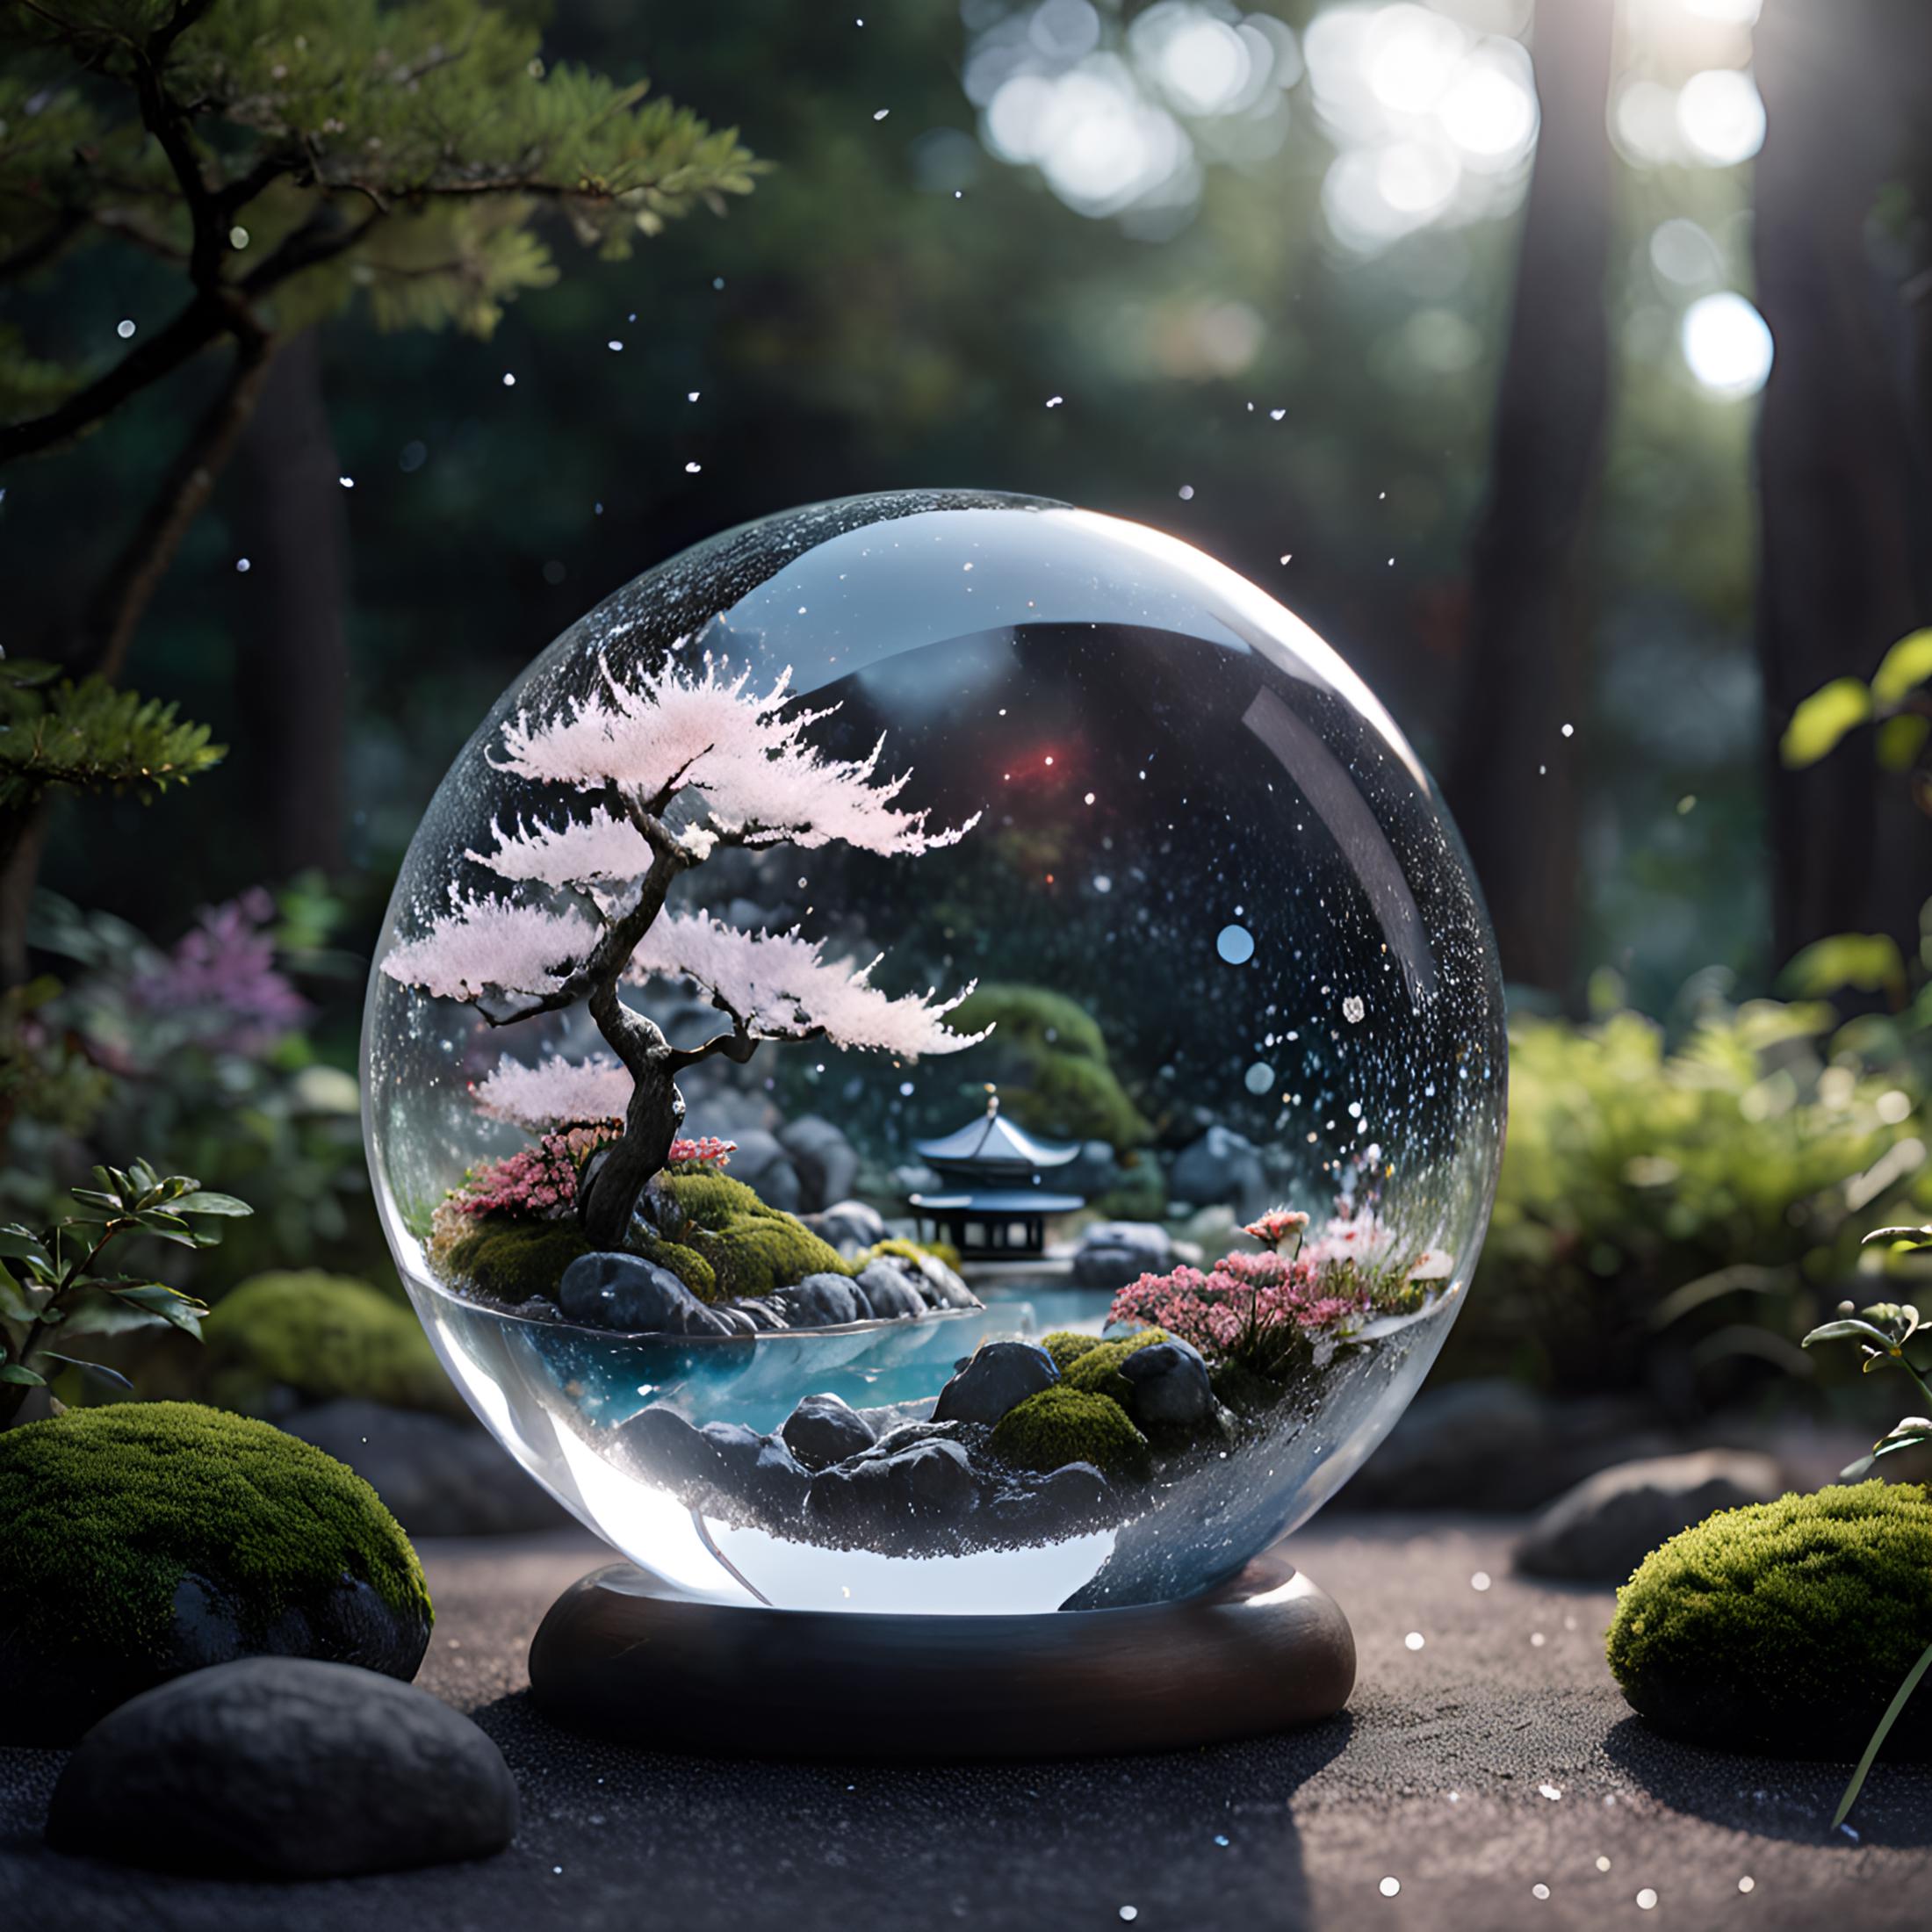 A clear glass globe with a miniature garden inside.